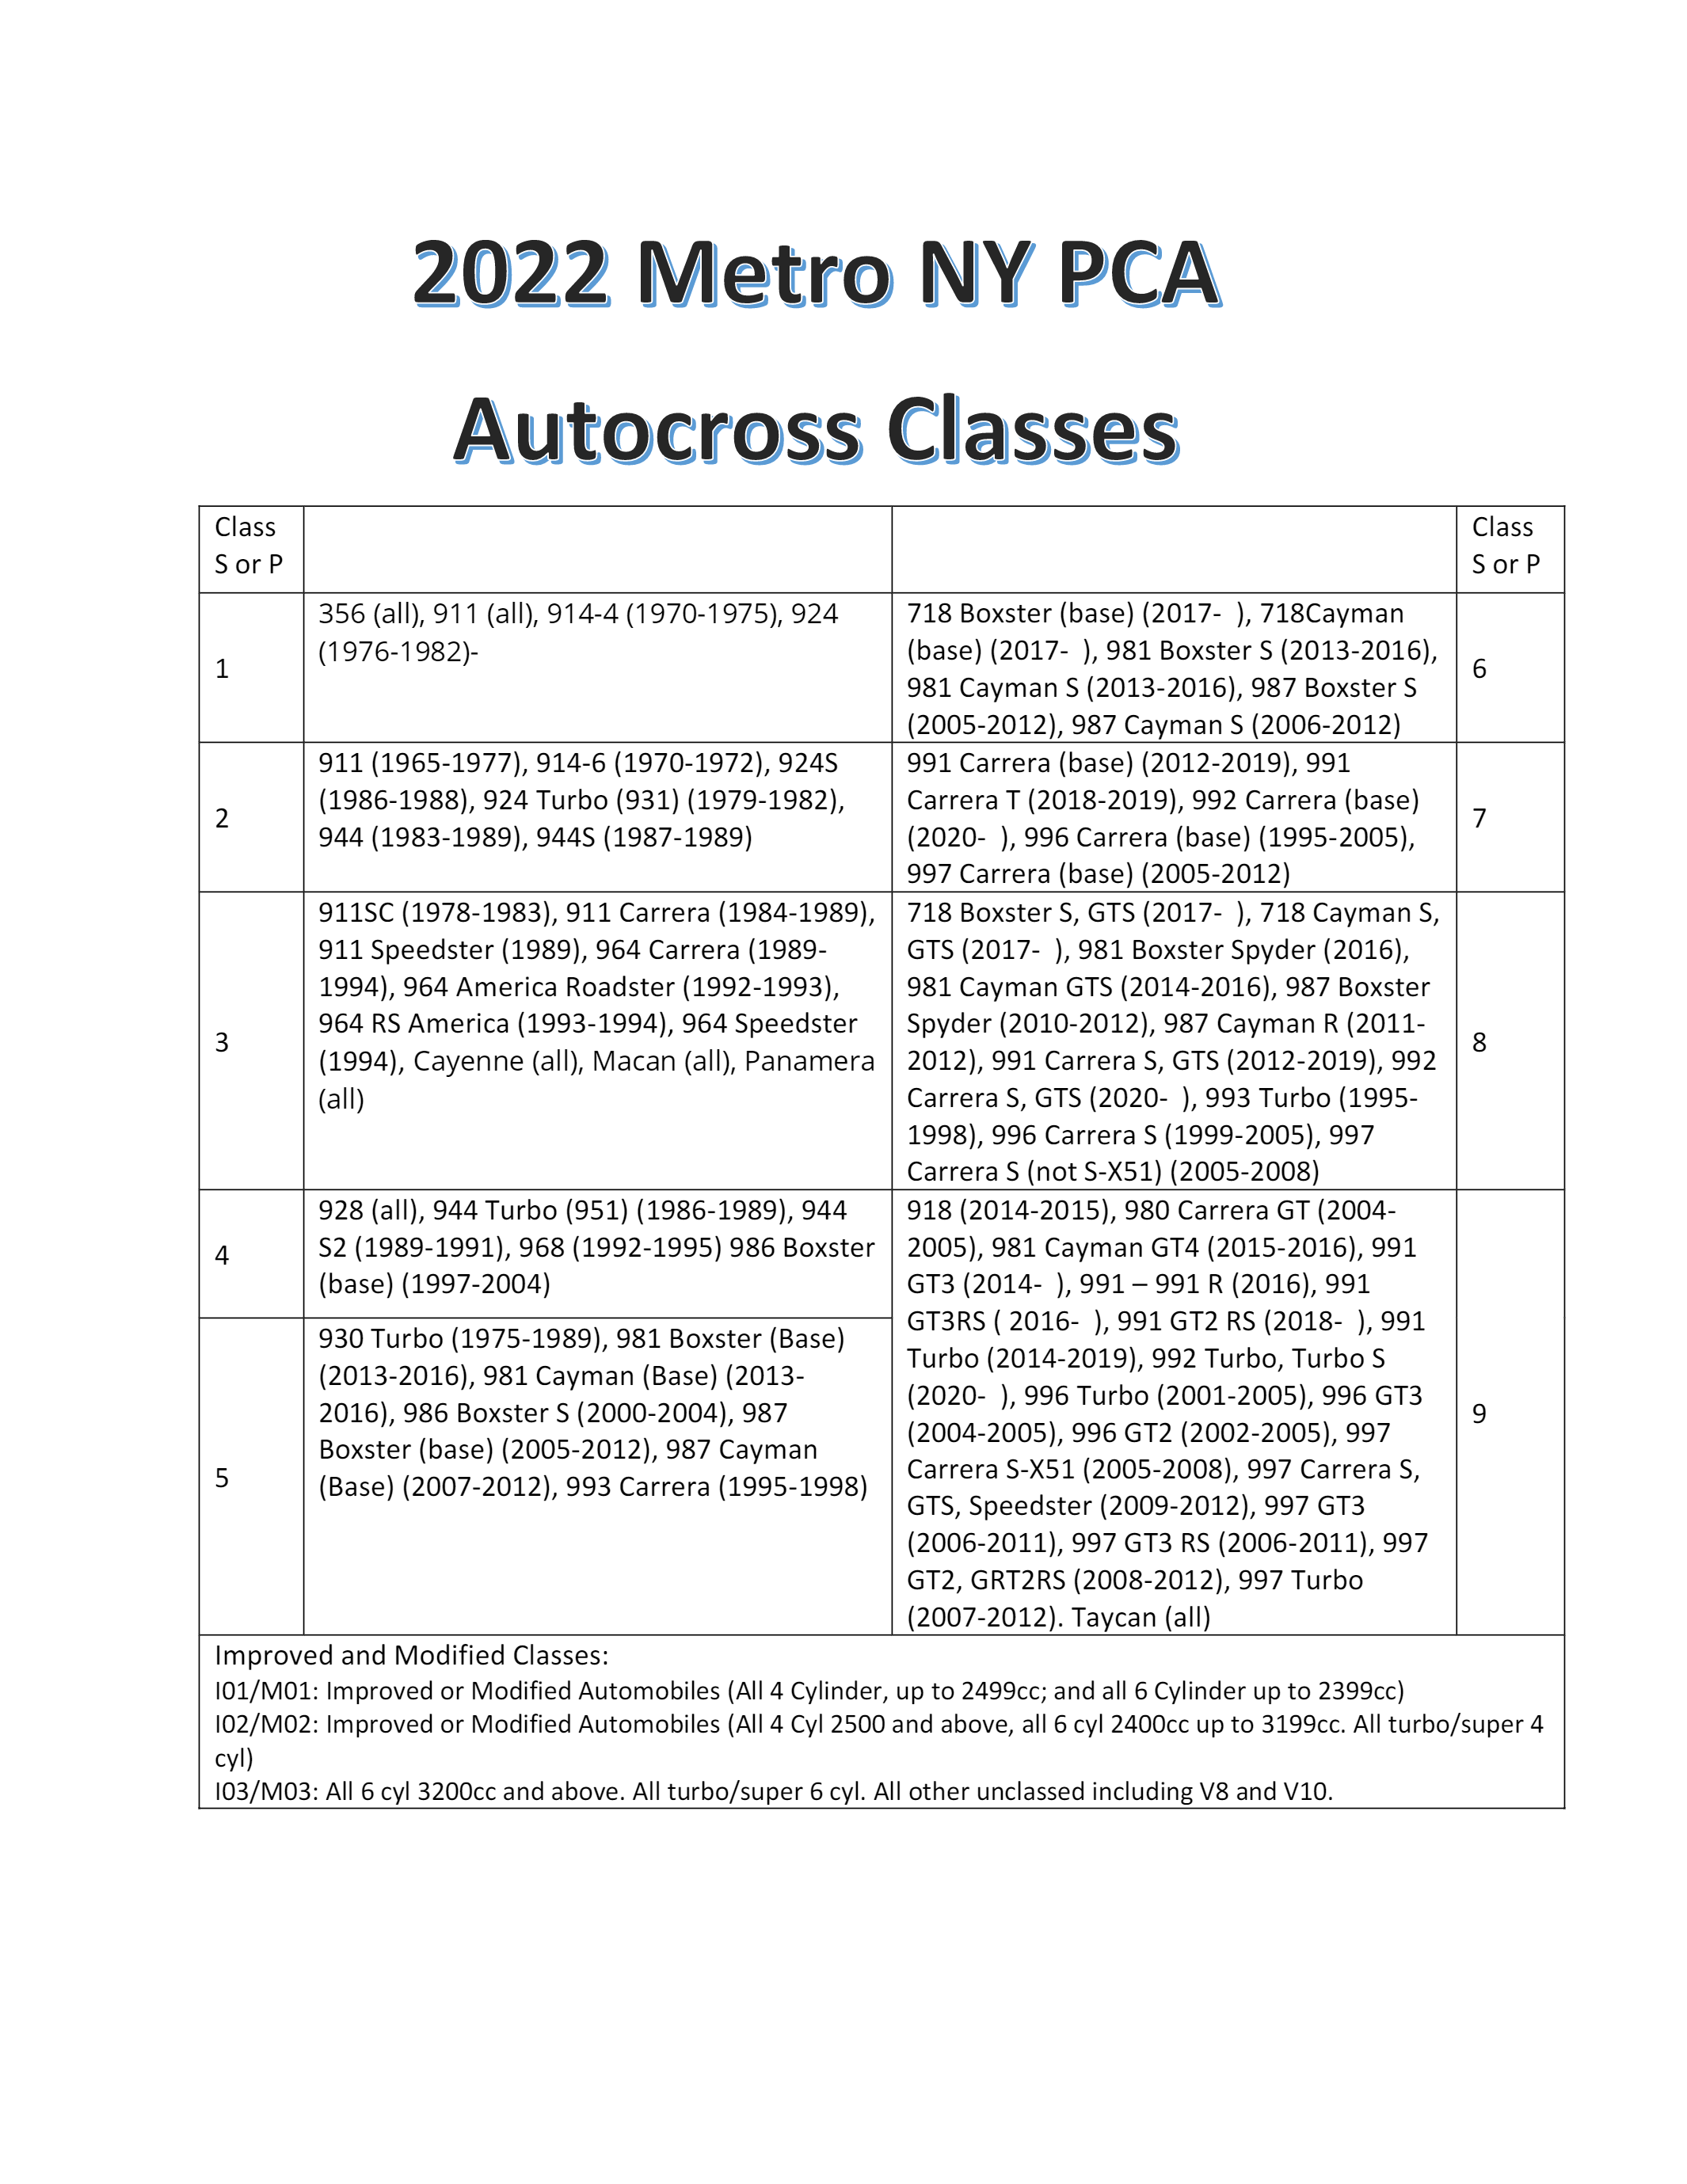 2022 Metro NY PCA Autocross Classes